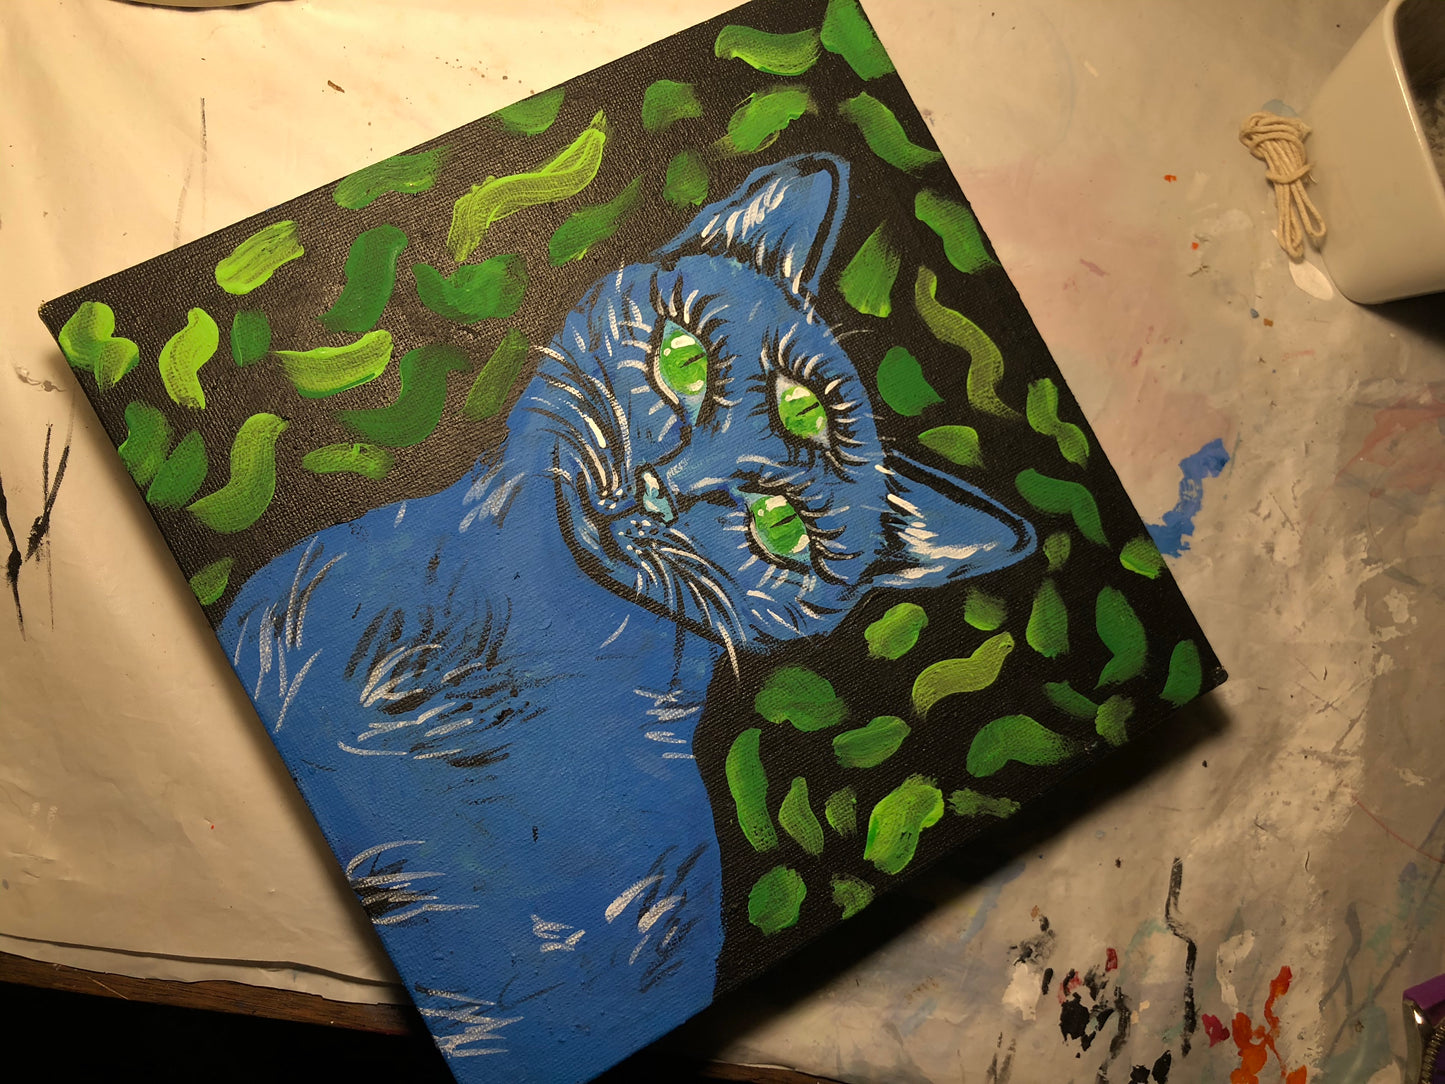 Blue third eye cat